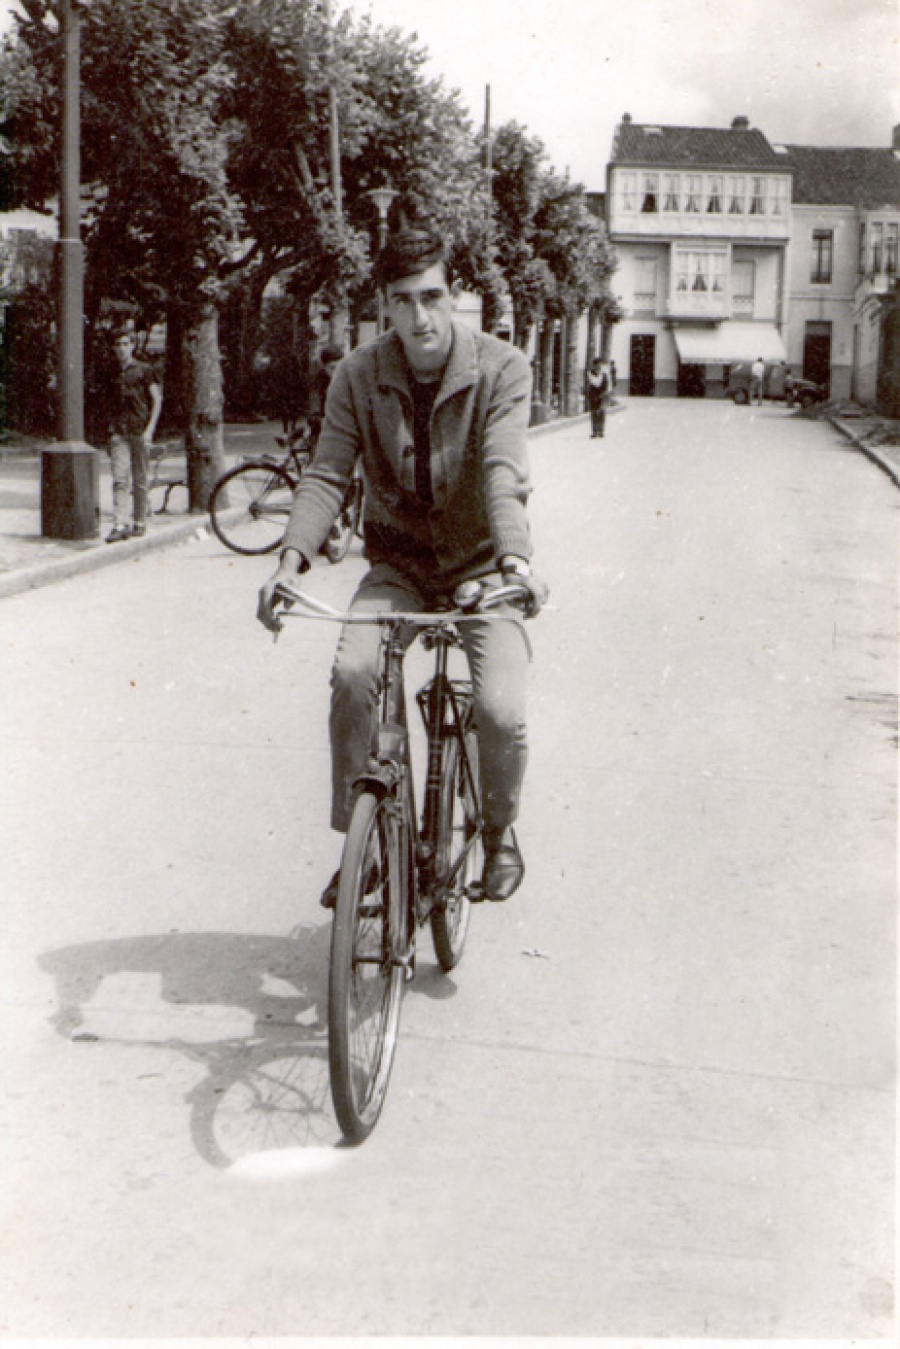 1964 - De paseo en bici